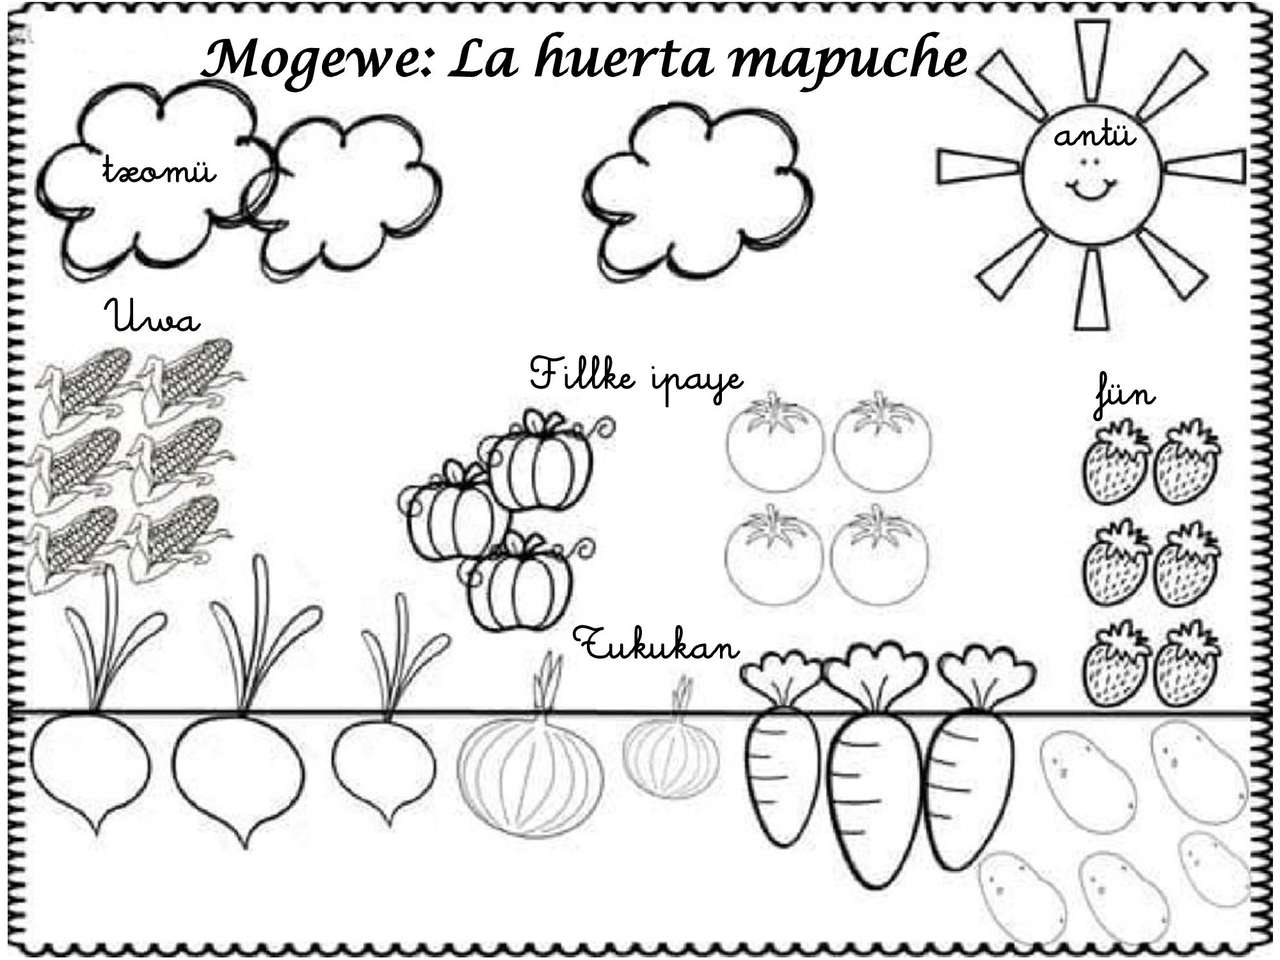 Mogewe: il giardino mapuche puzzle online